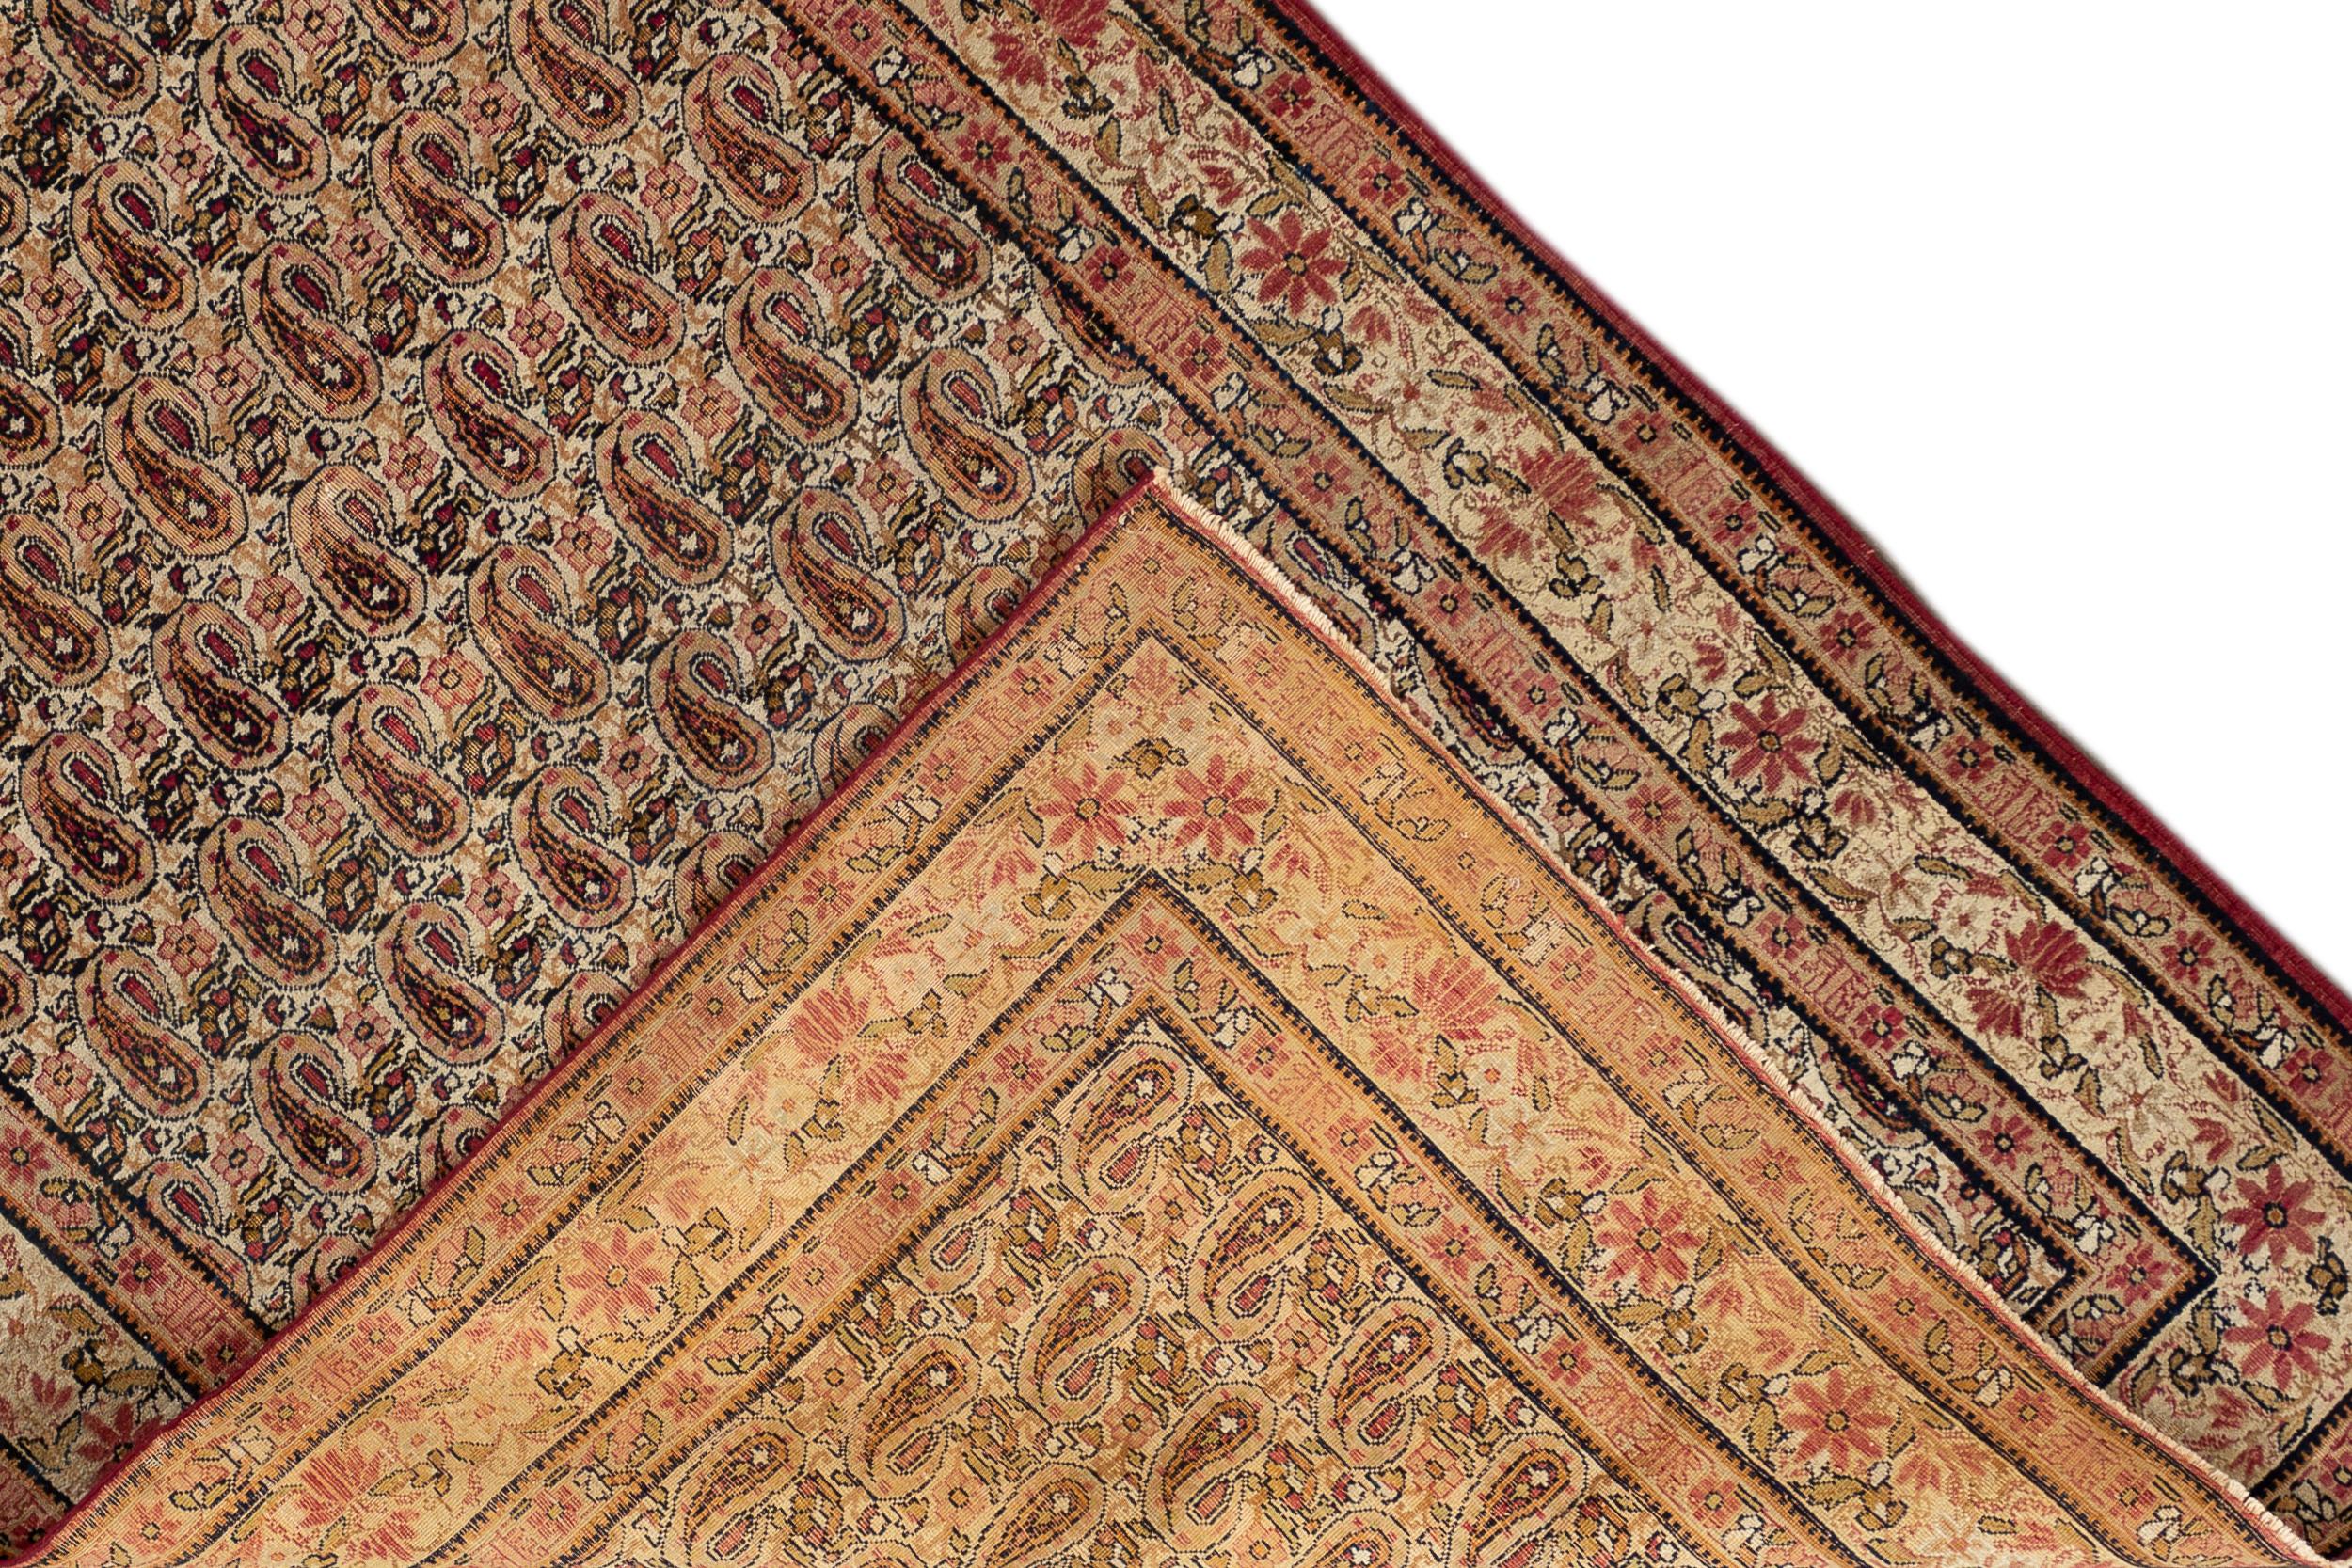 Late 19th century Kerman Scatter rug: 4'2